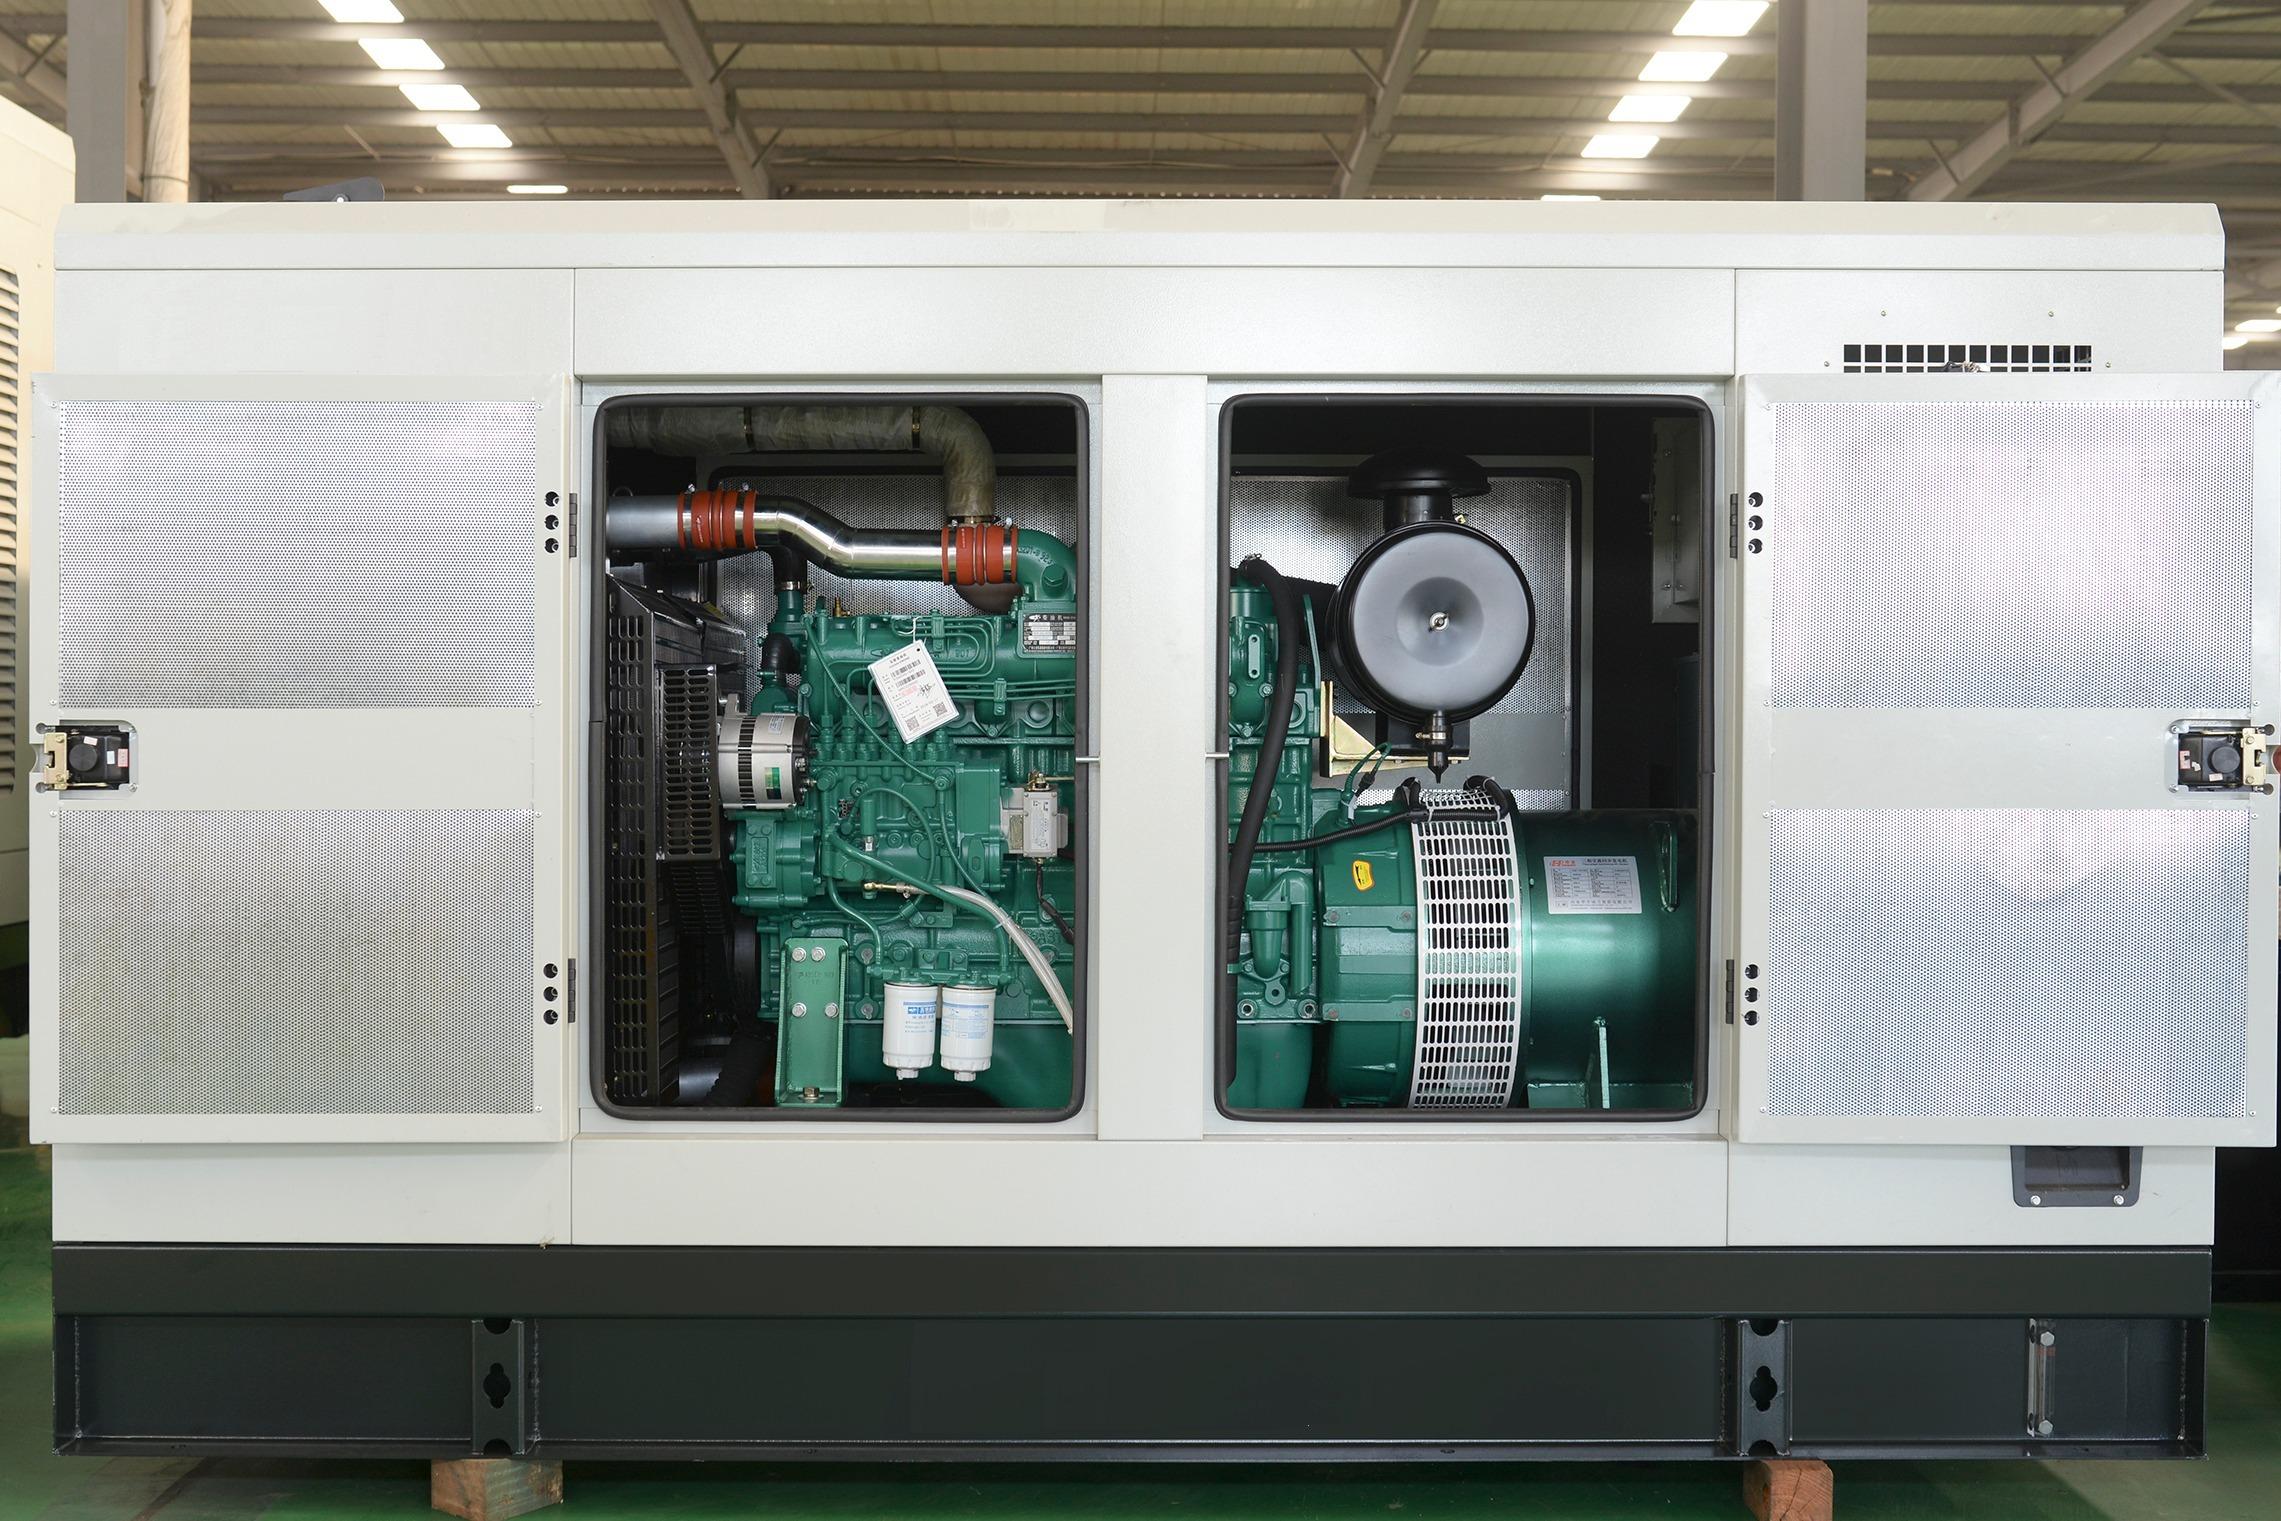 silent type diesel generator set